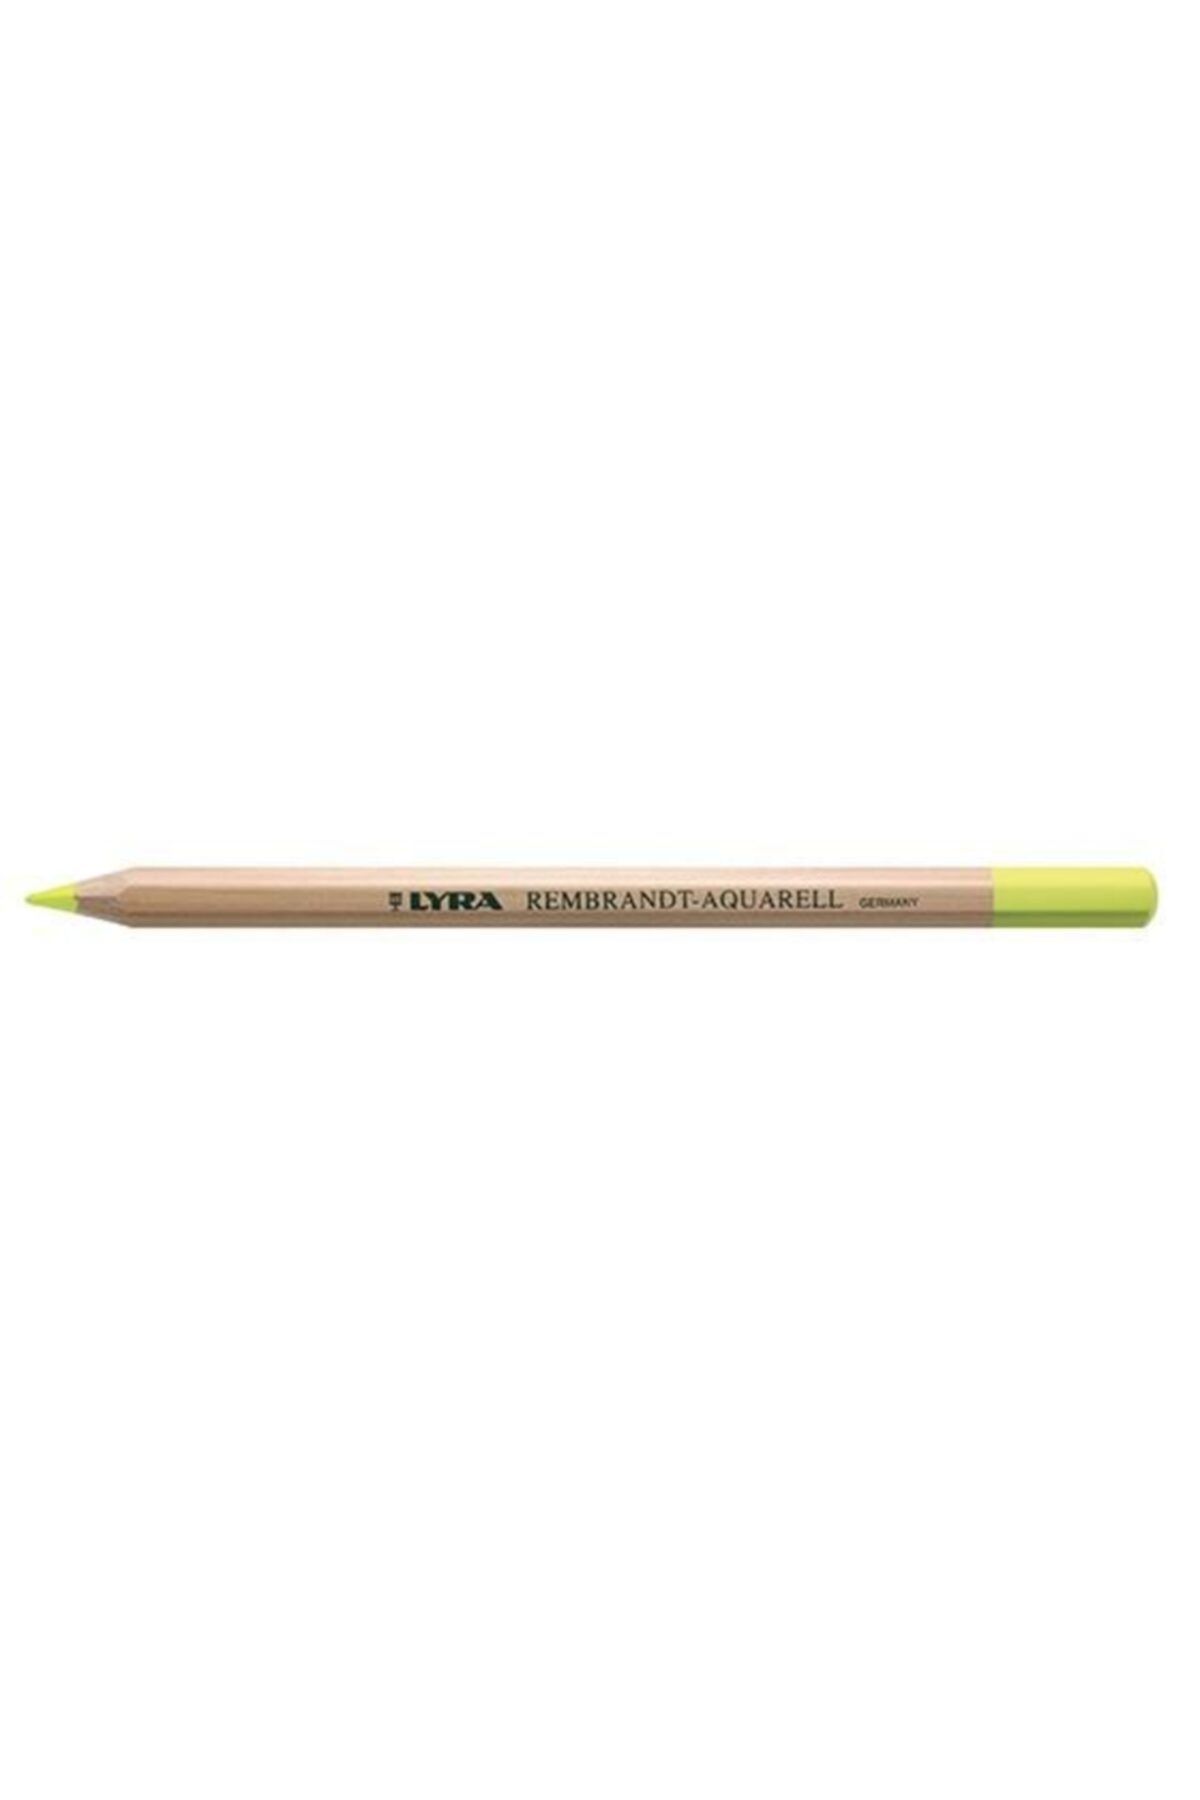 Lyra مداد رنگی رامبراند آکوارل ZINC YELLOW L2010004